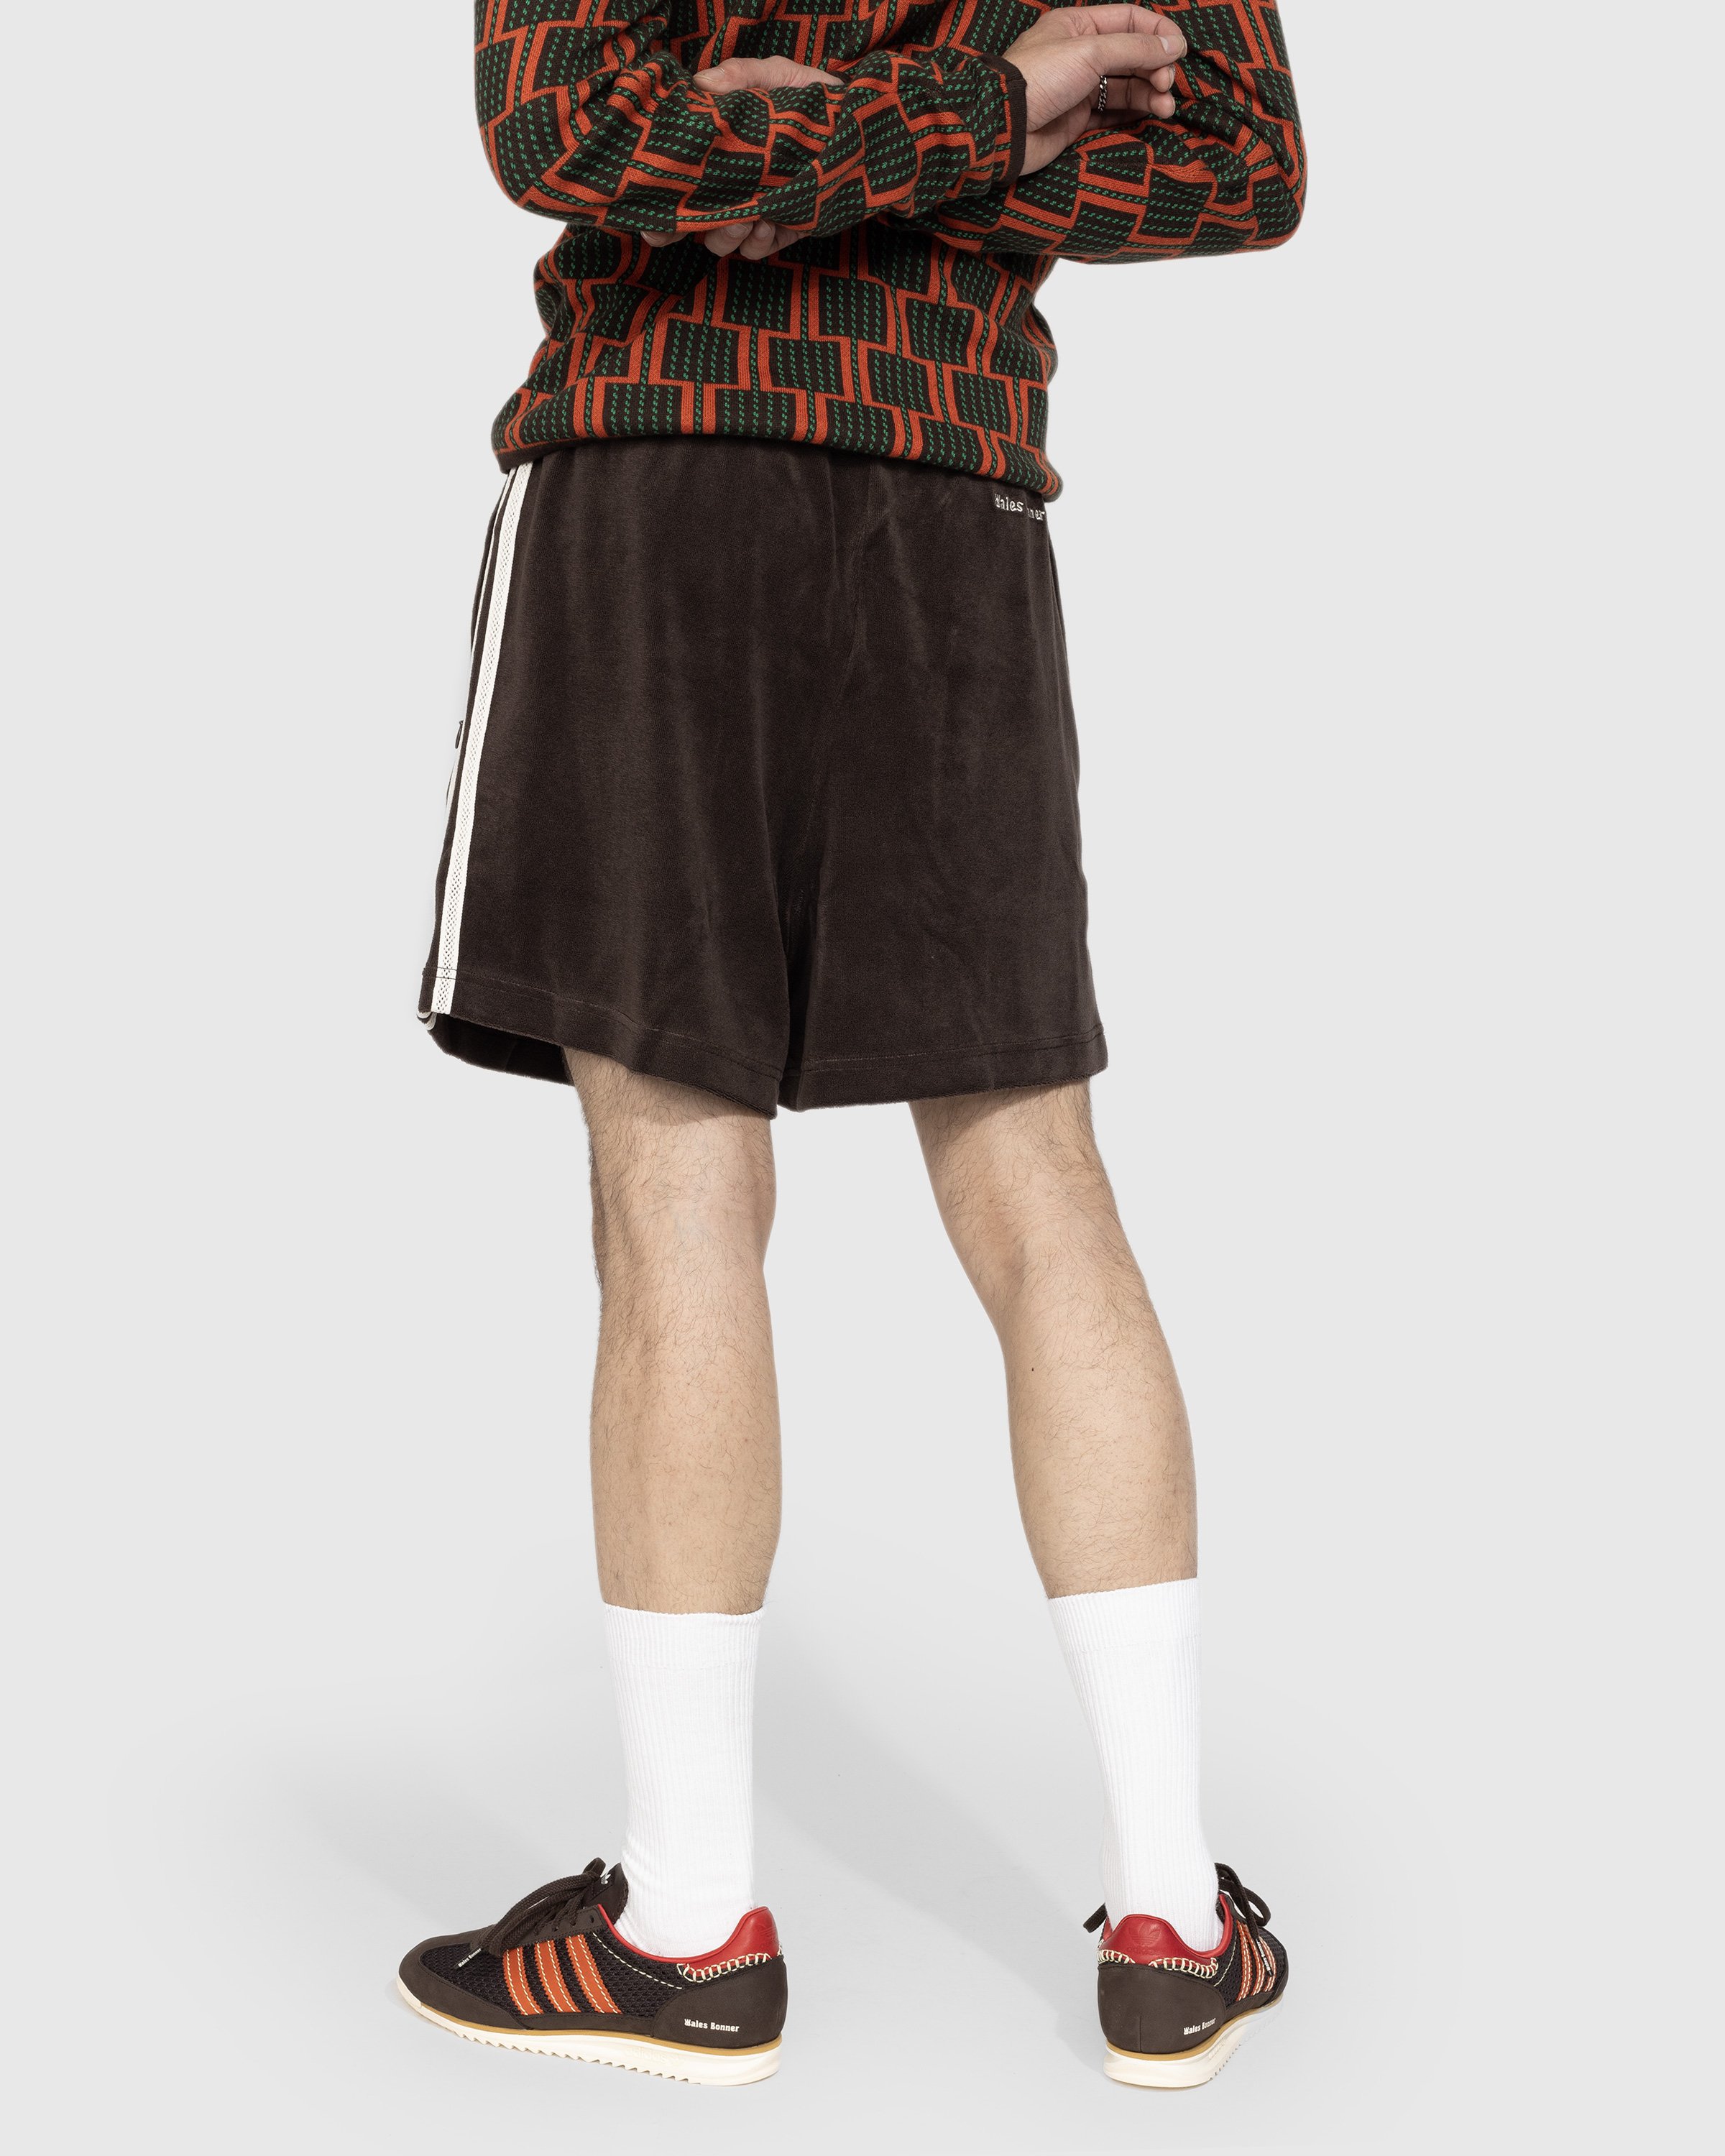 Adidas x Wales Bonner - Cotton Blend Shorts Dark Brown - Clothing - Brown - Image 3